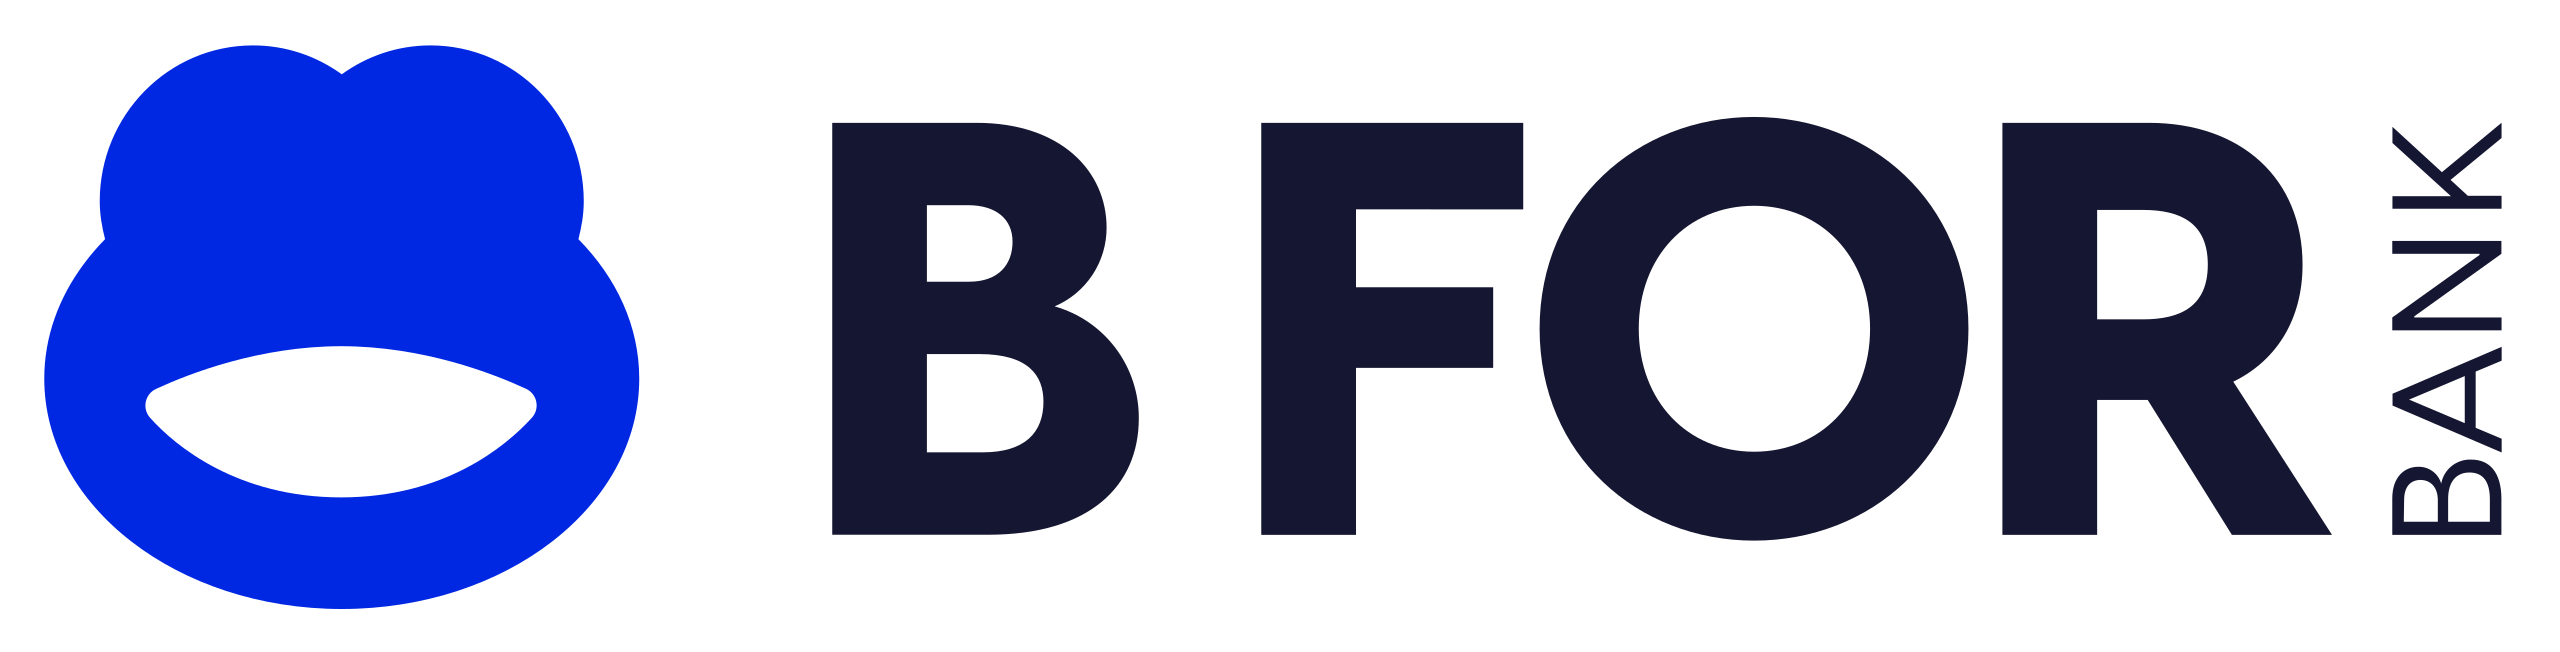 logo b for bank 